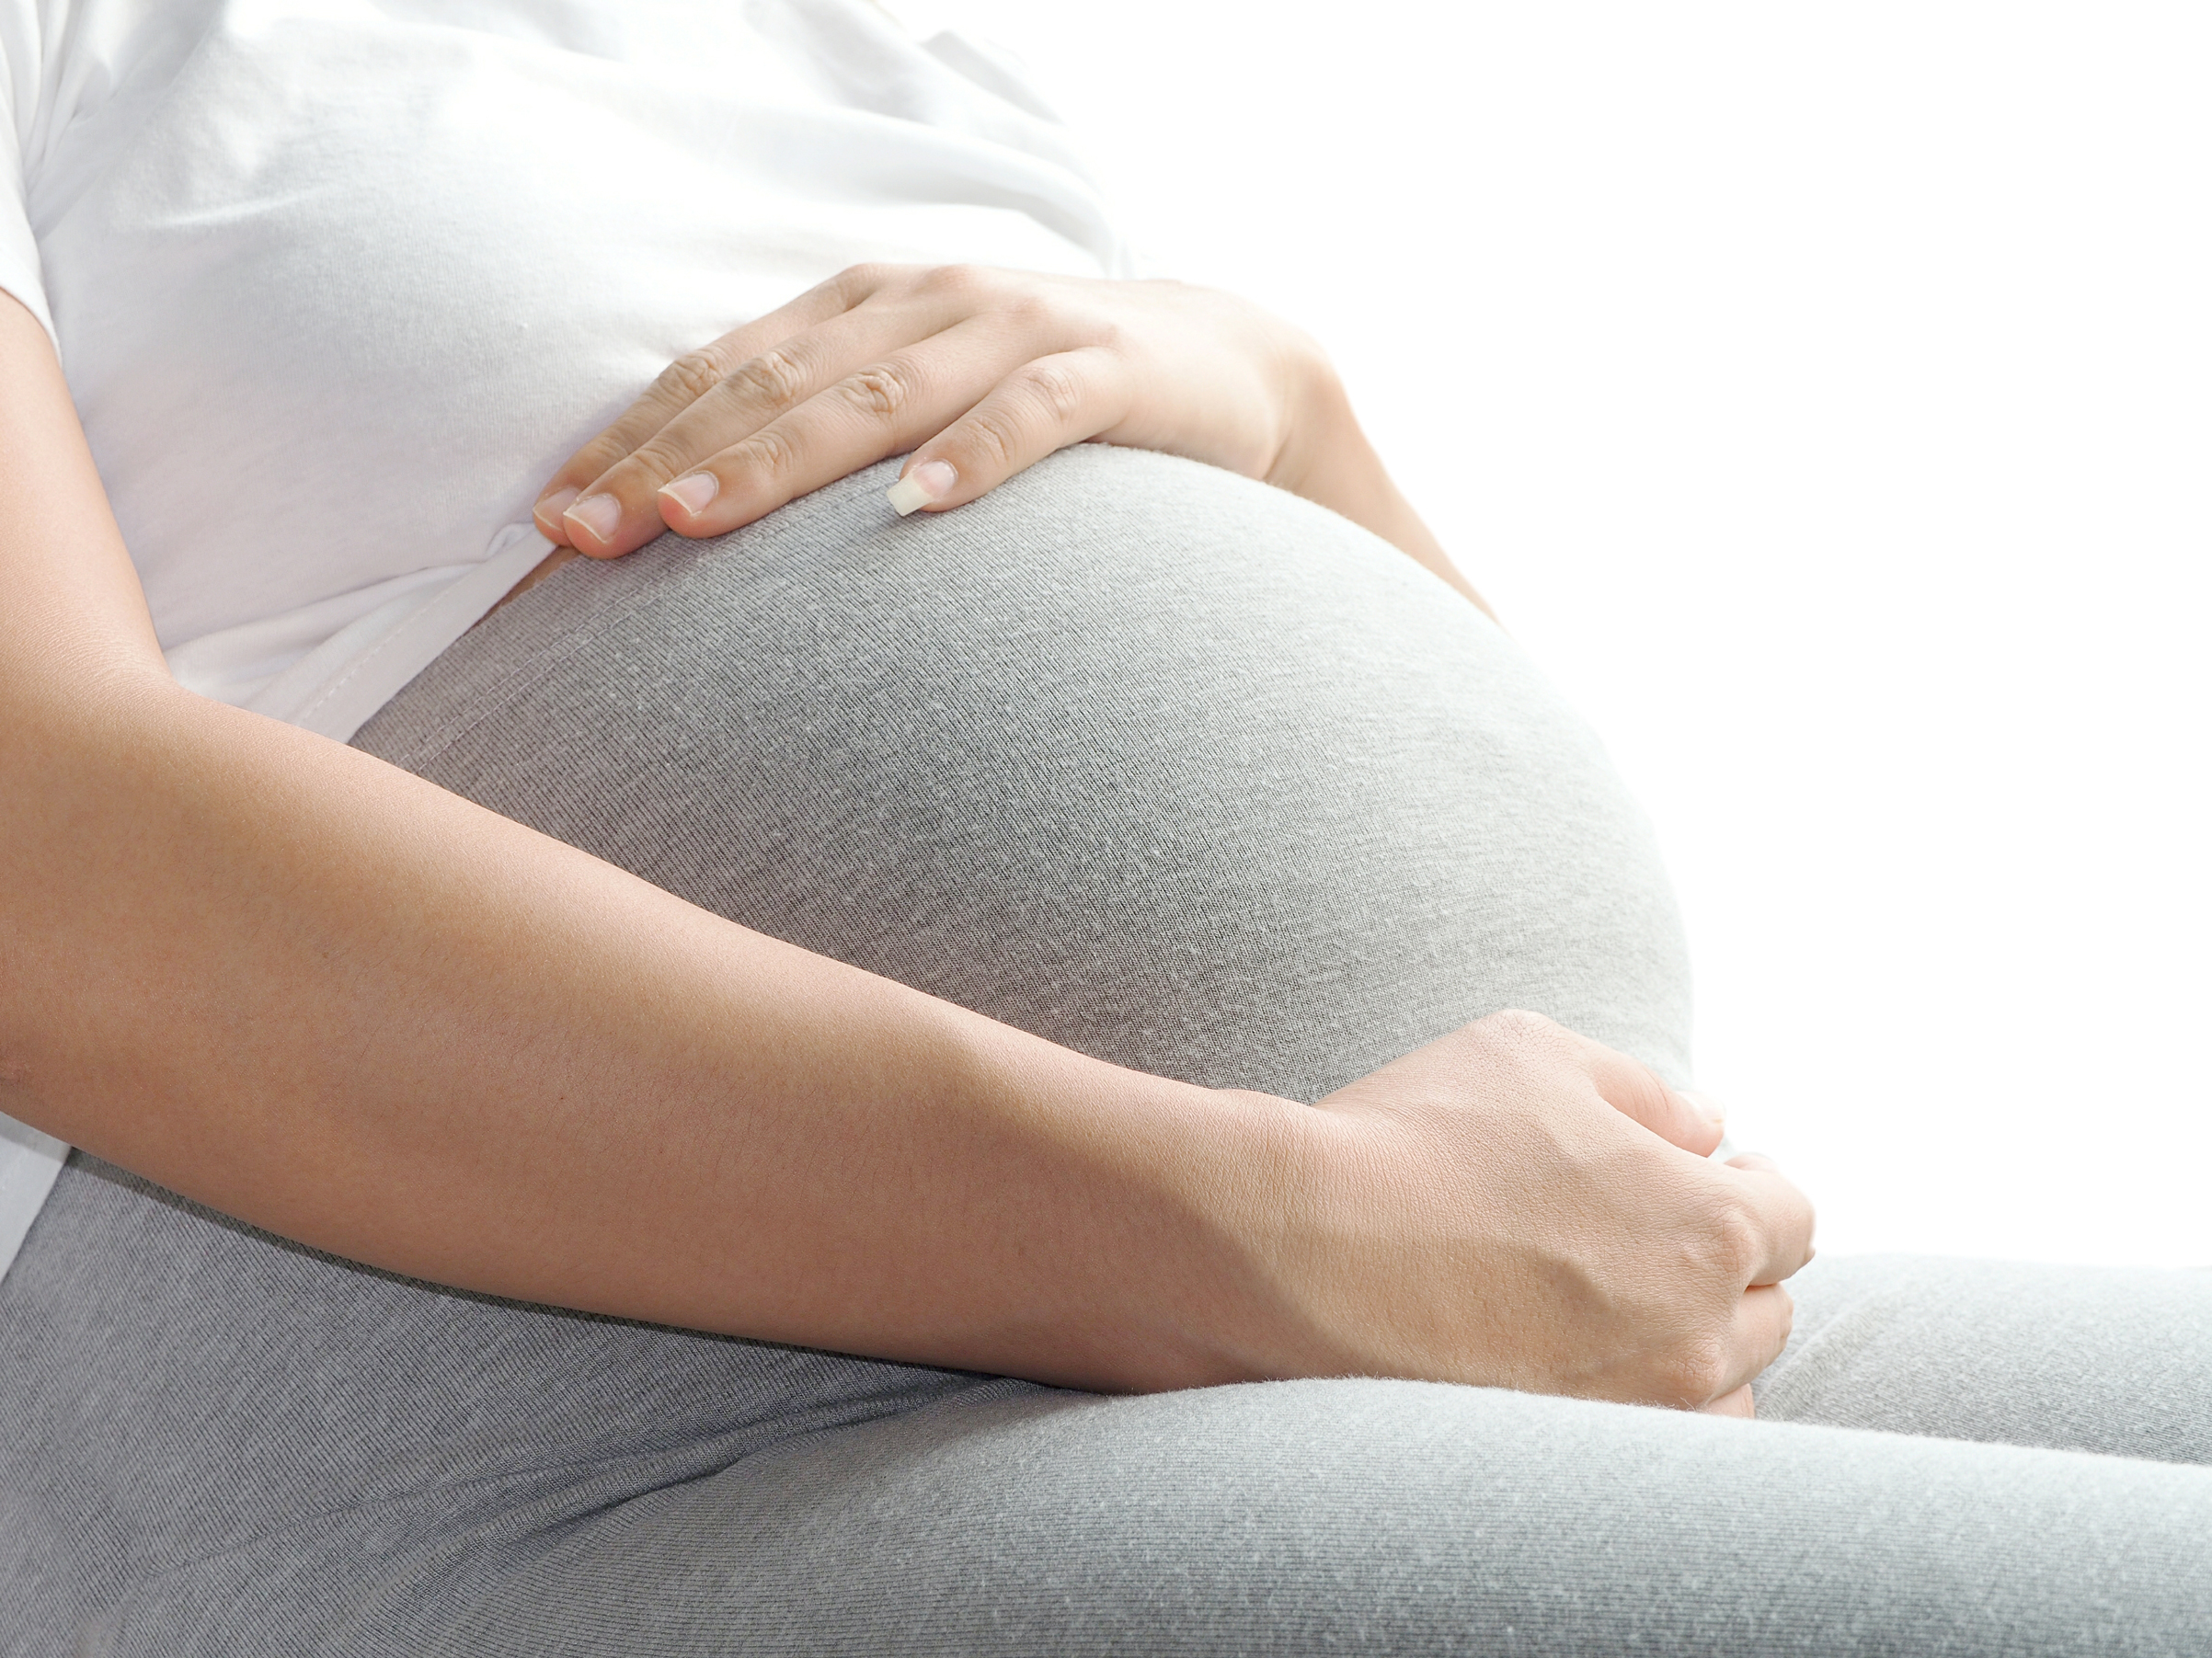 Asian Women Seeking Men To Get Pregnant